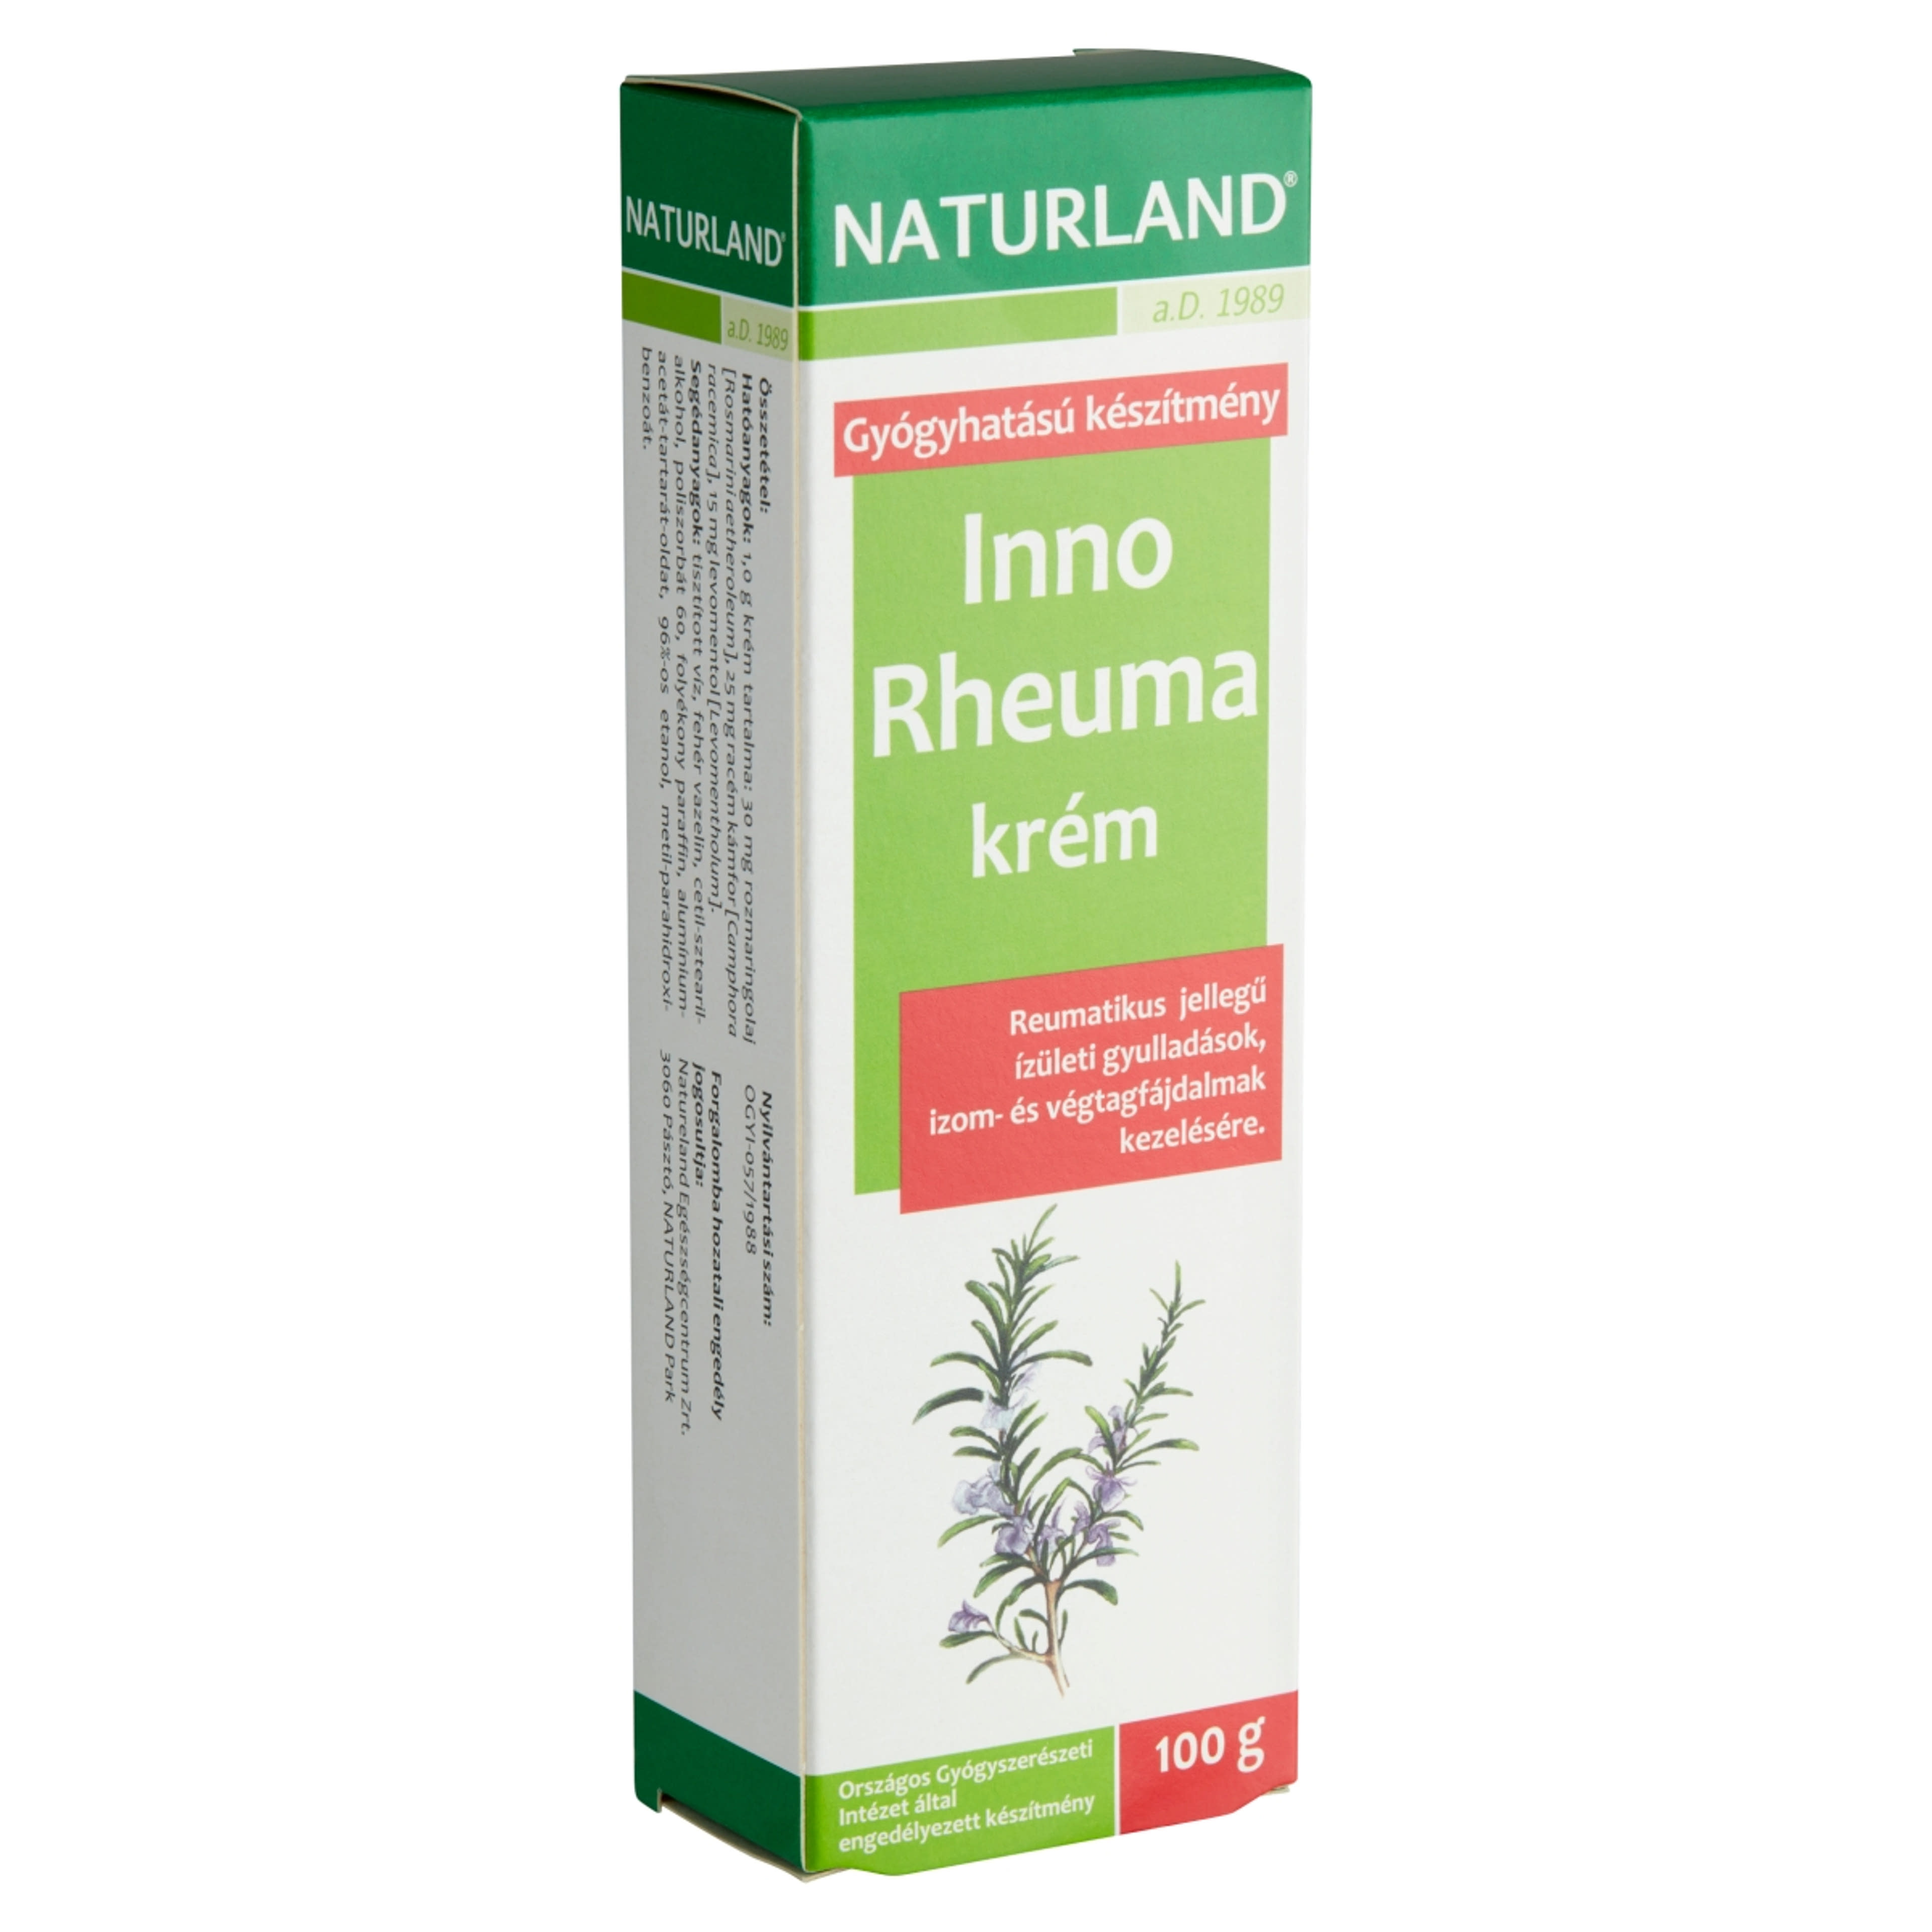 Naturland Inno Rheuma Krém - 100 g-2